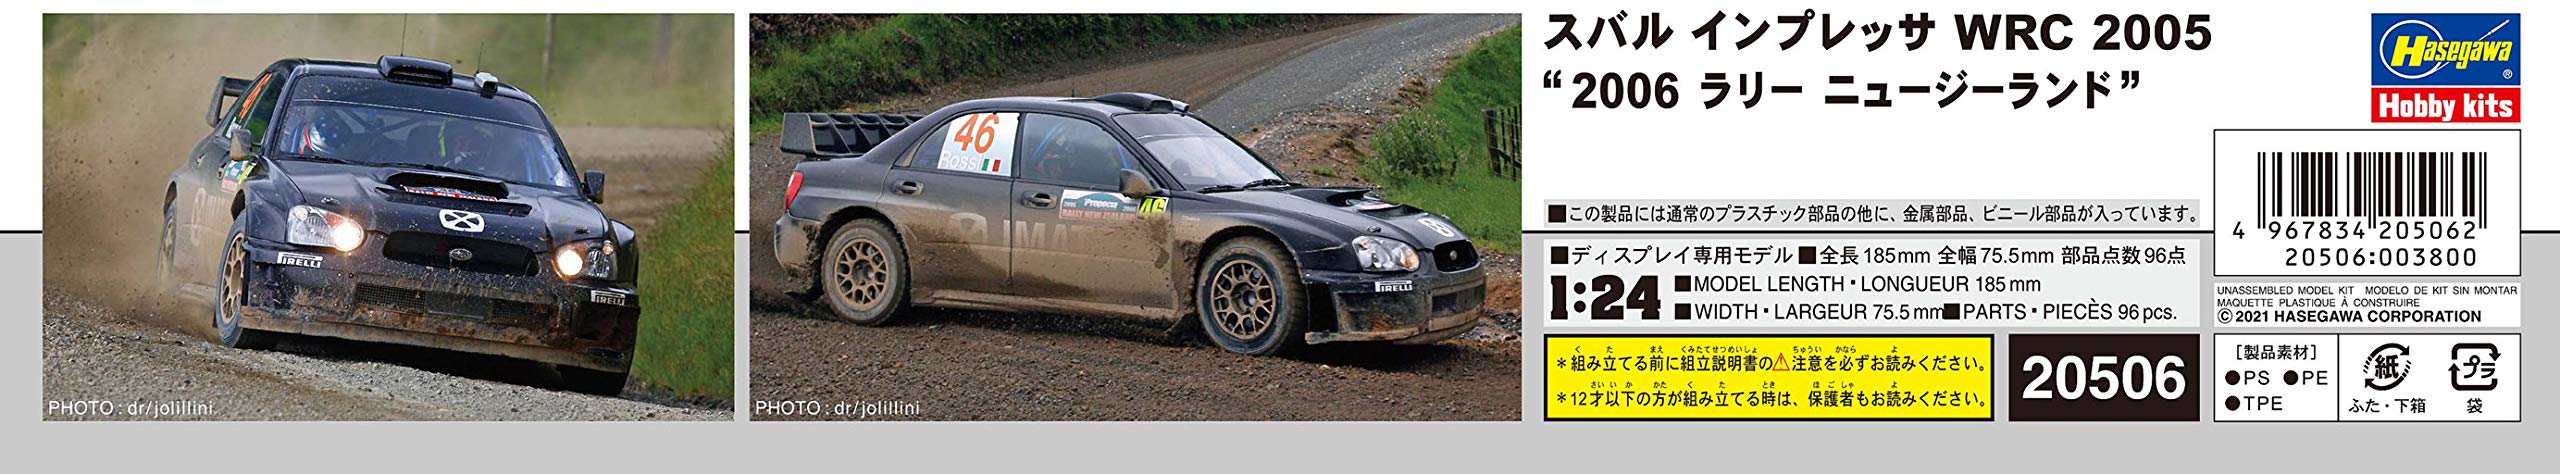 Hasegawa 1/24 Subaru Impreza WRC 2005 2006 Rallye Neuseeland Plastikmodellbausatz